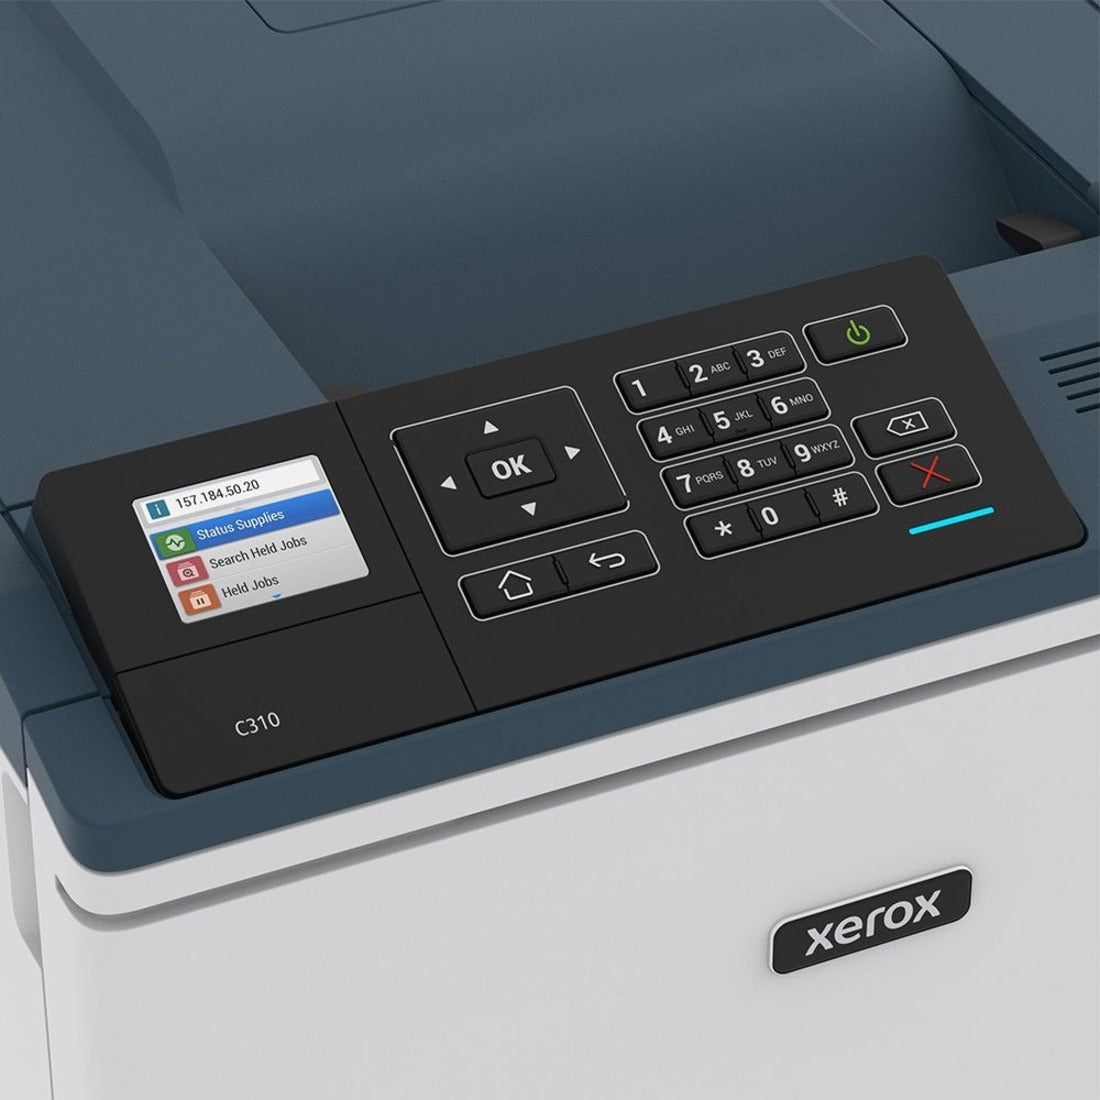 Xerox C310/DNI C310 Color Laser Printer, Wireless, Automatic Duplex Printing, 35 ppm, 1200 x 1200 dpi